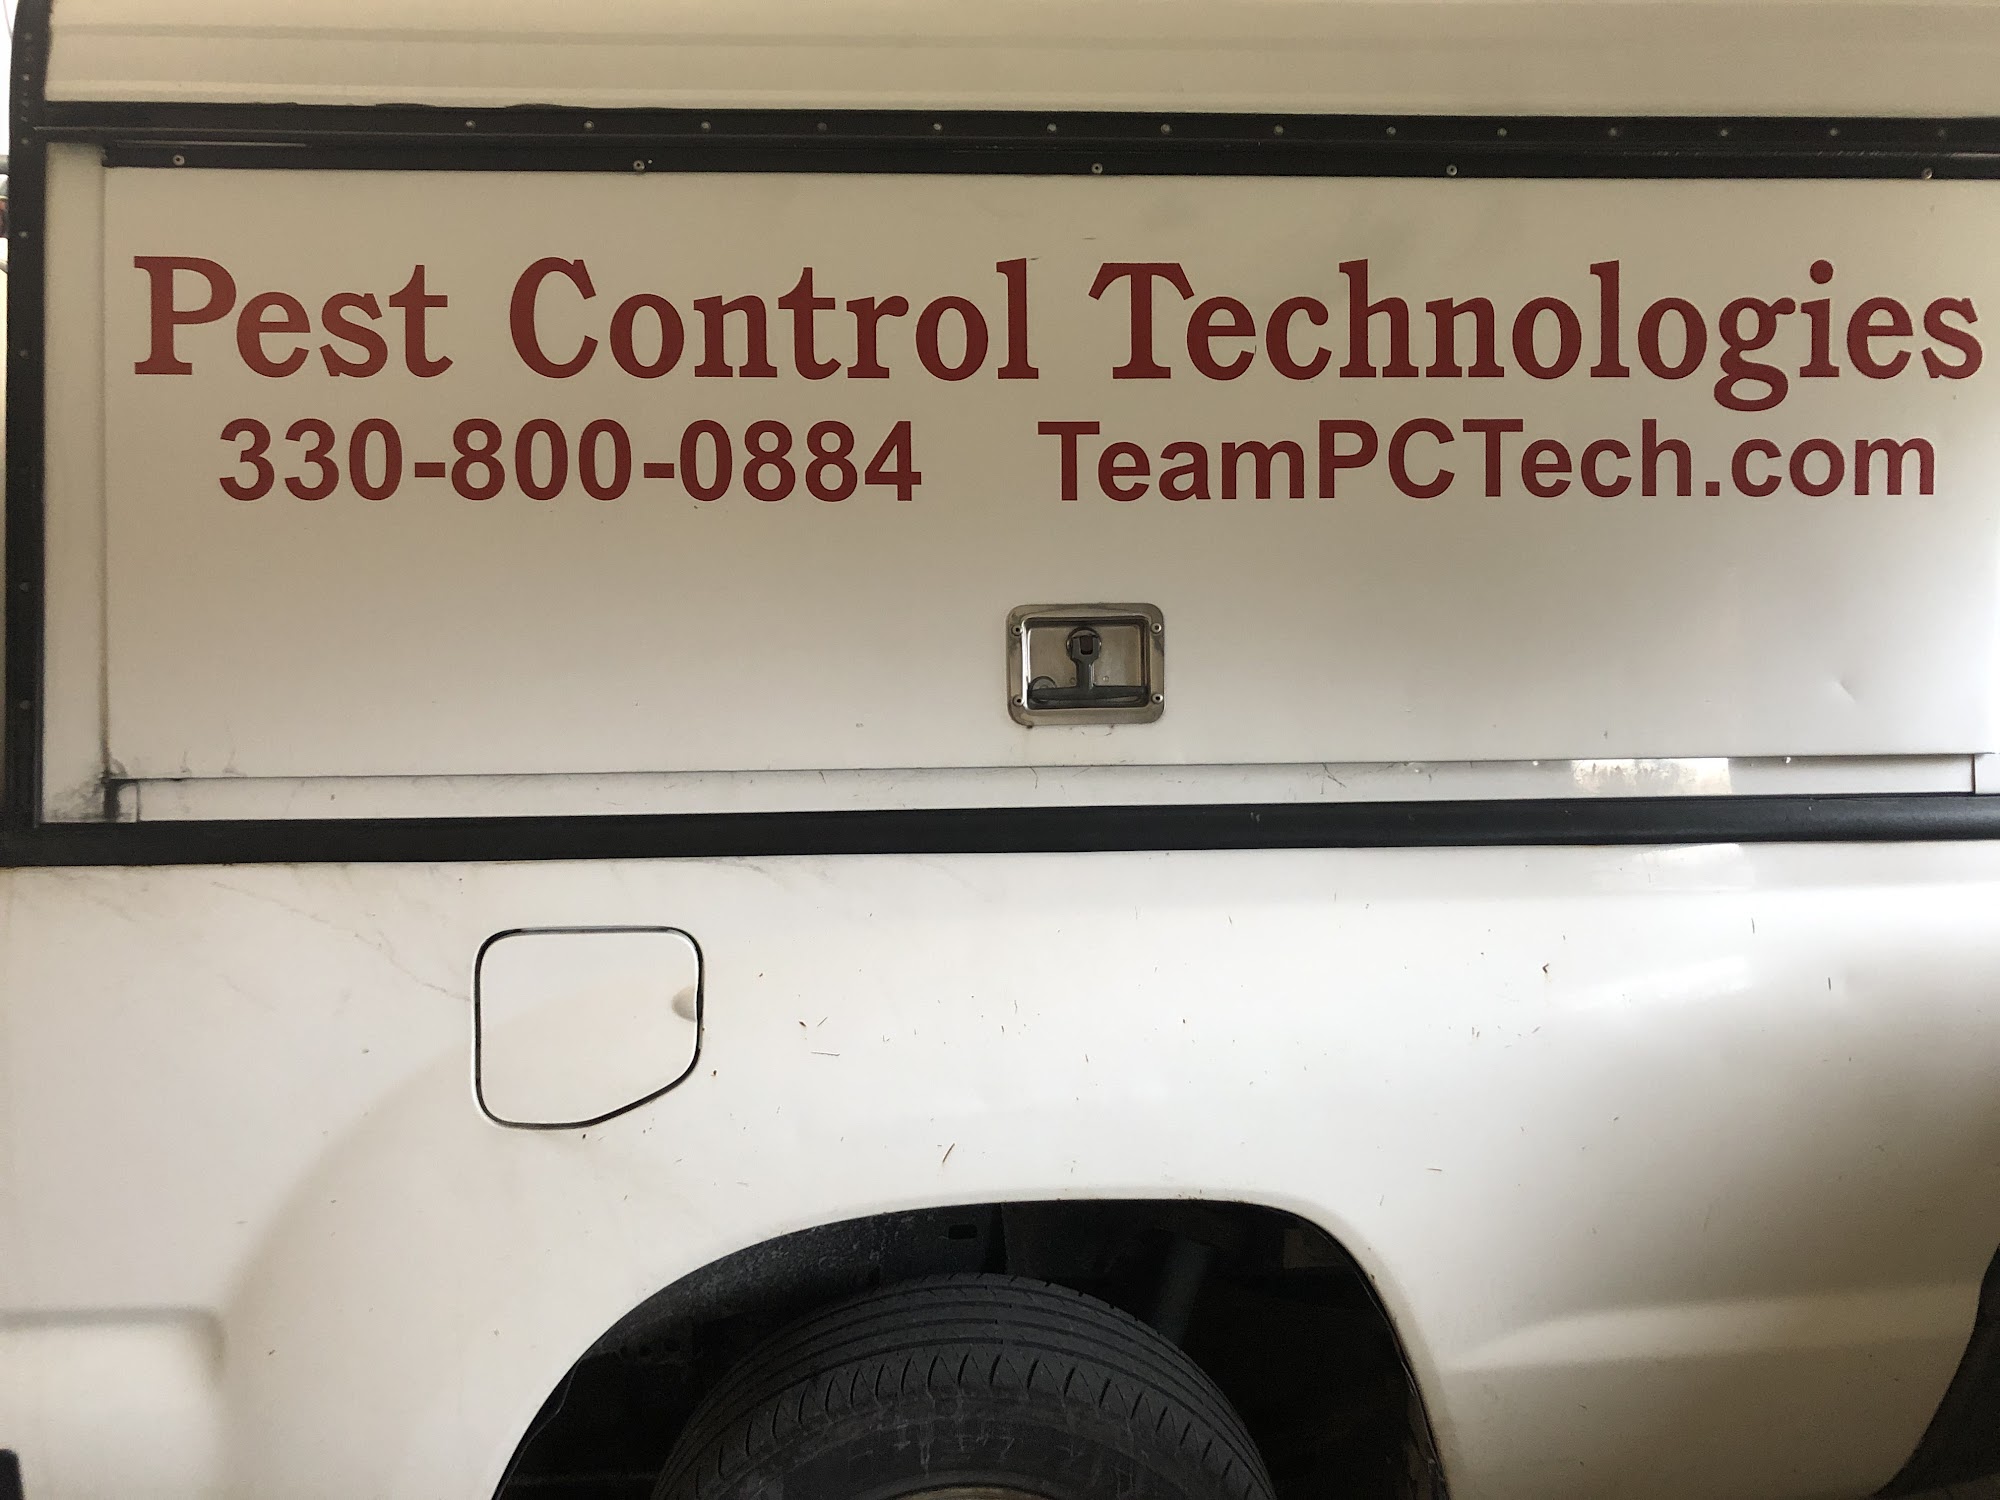 Pest Control Technologies